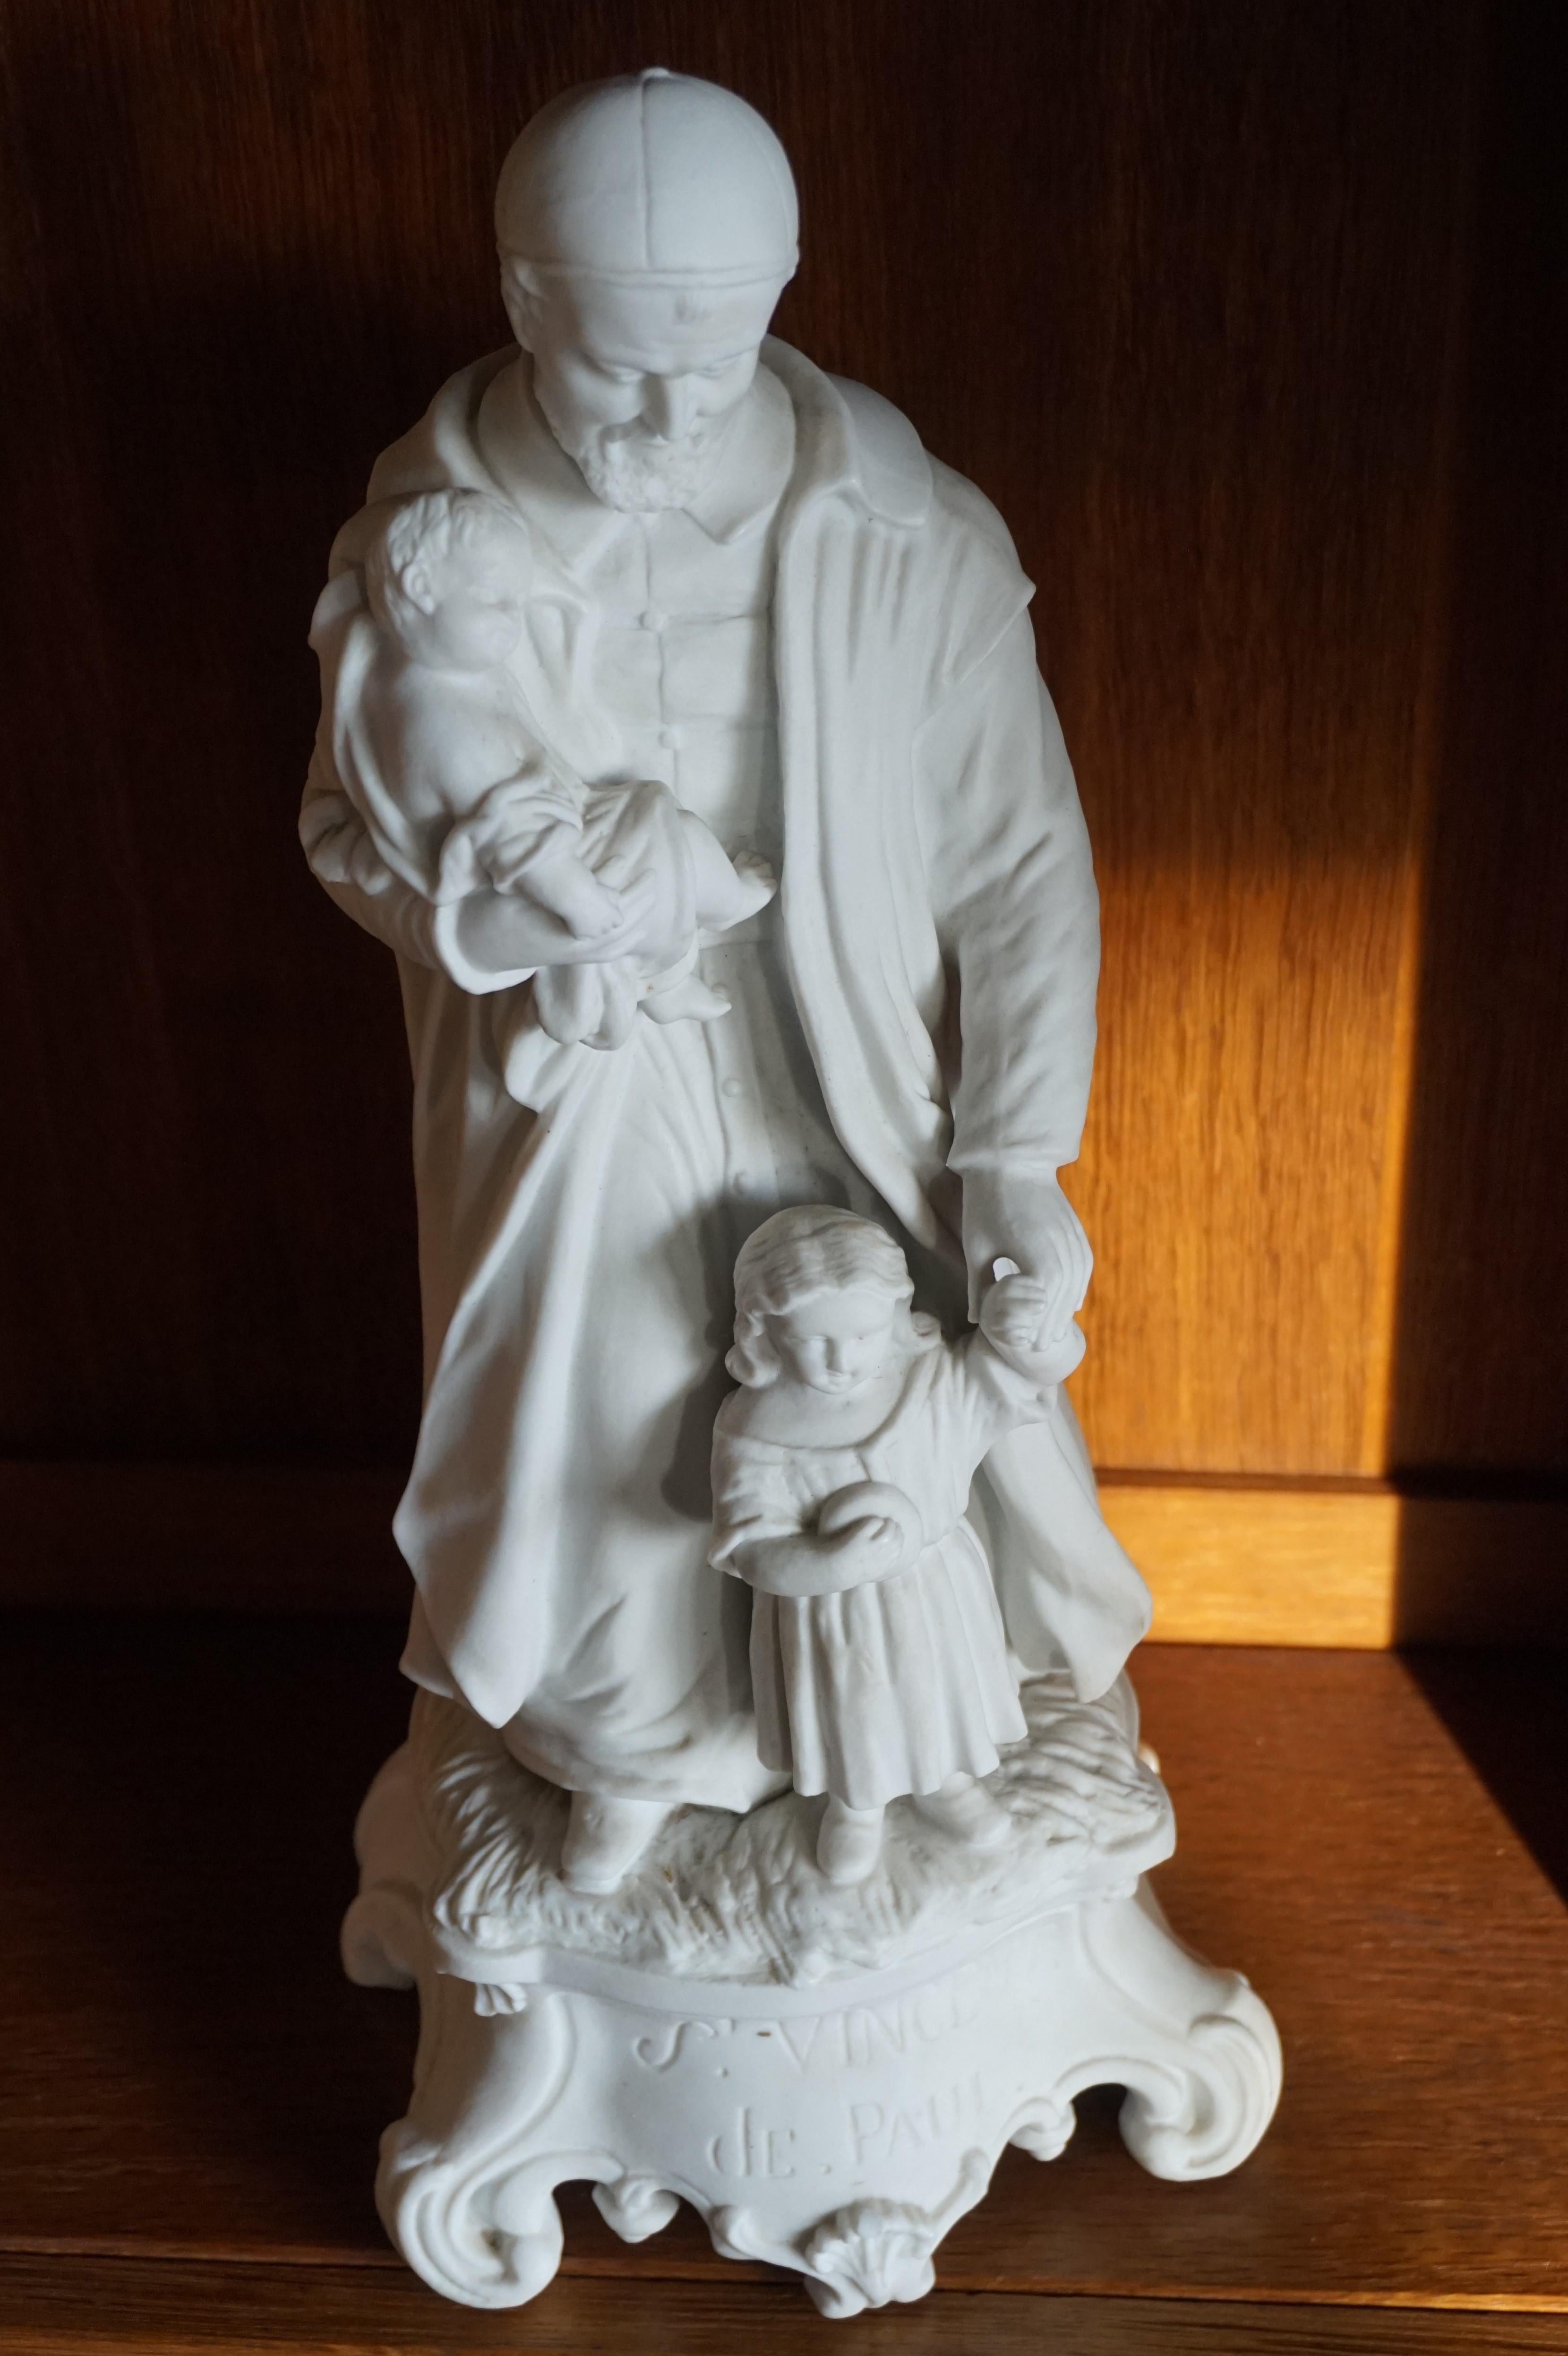 Hand-Crafted Top Quality Bisque Porcelain Sculpture of Saint Vincent de Paul with Children For Sale